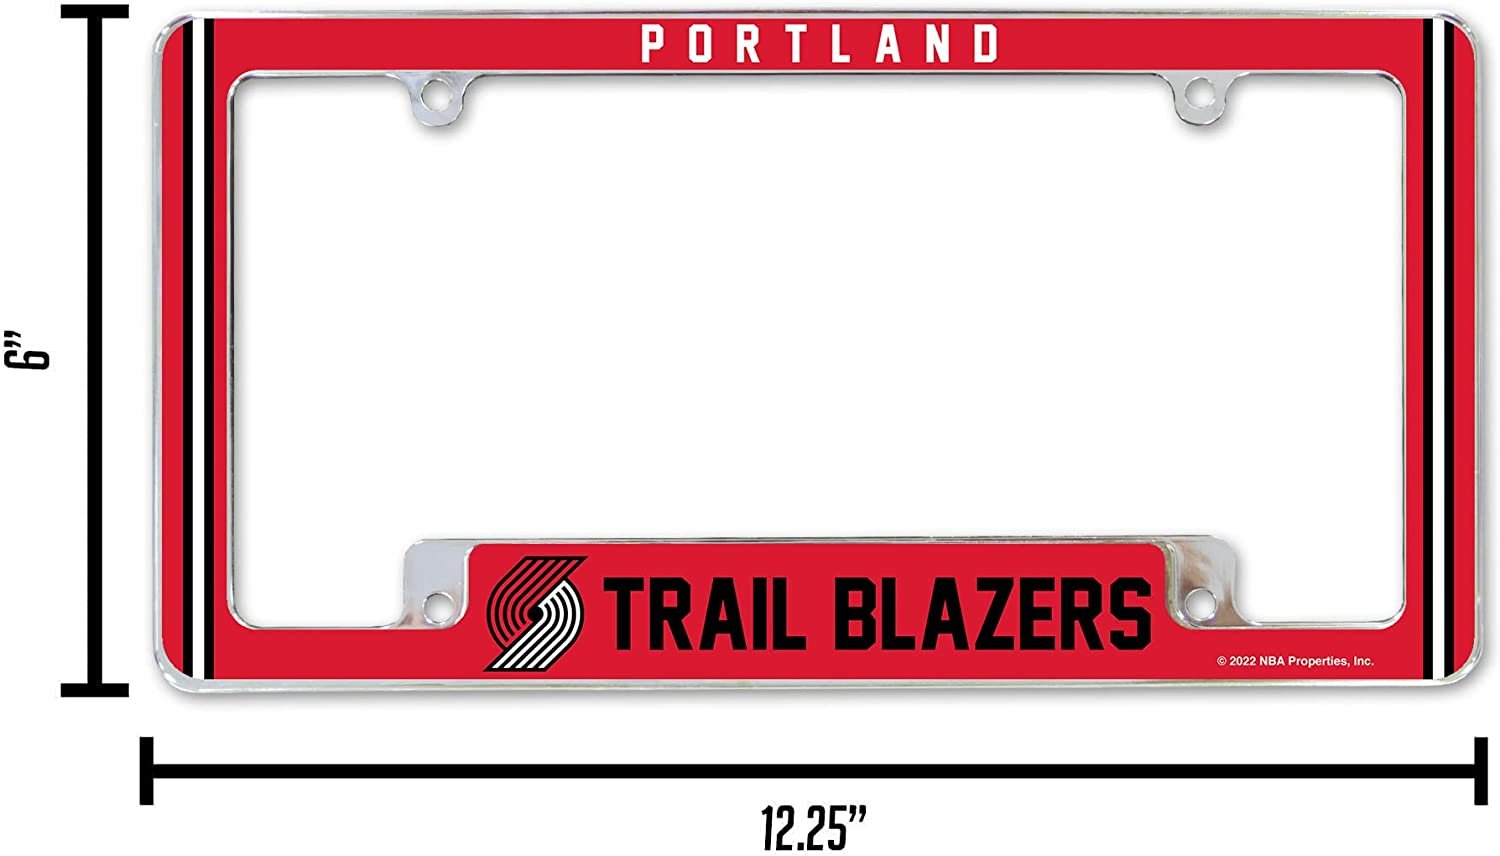 Portland Trail Blazers Metal License Plate Frame Chrome Tag Cover Alternate Design 6x12 Inch